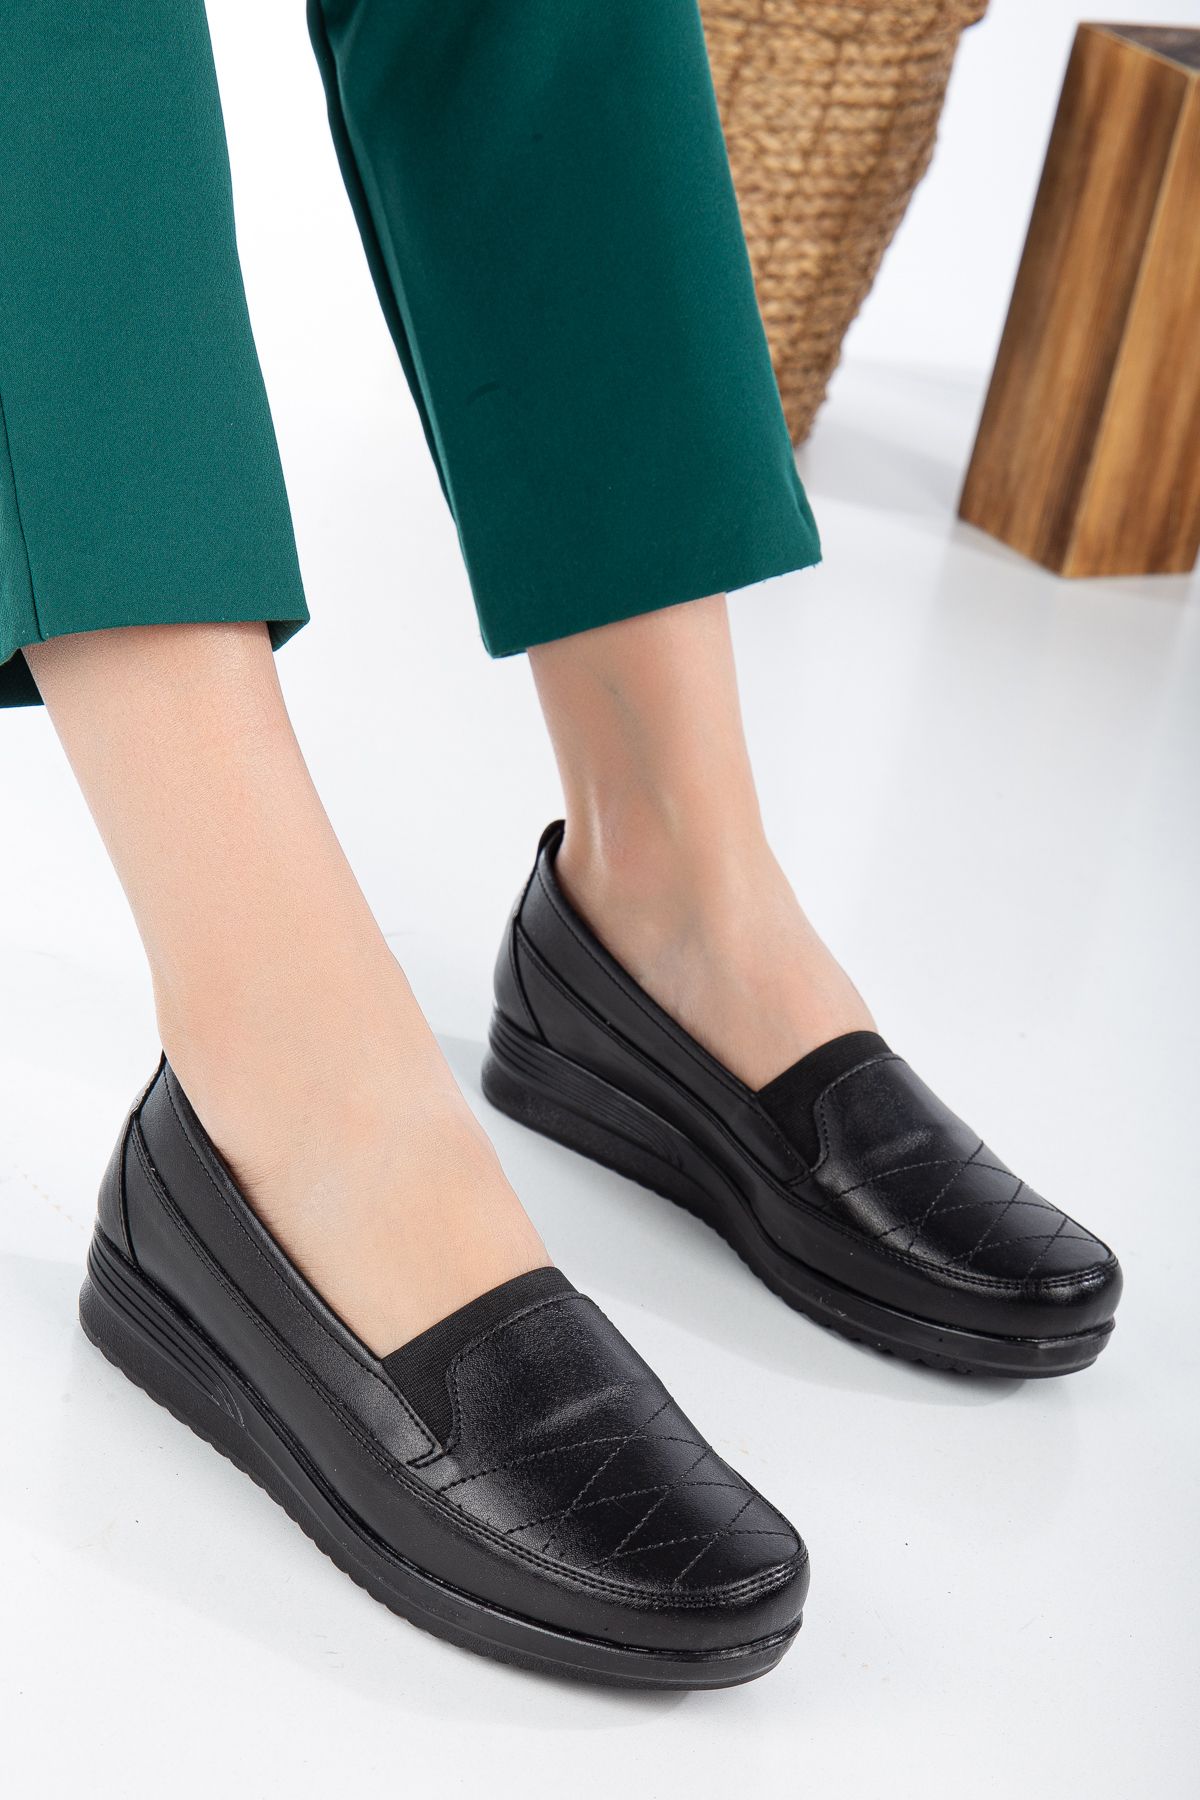 NAKKA Nk03 Siyah Günlük Anne Ortopedik Ayakkabı Kadın Babet Ayakkabı Klasik Ayakkabı Deri Ayakkabı